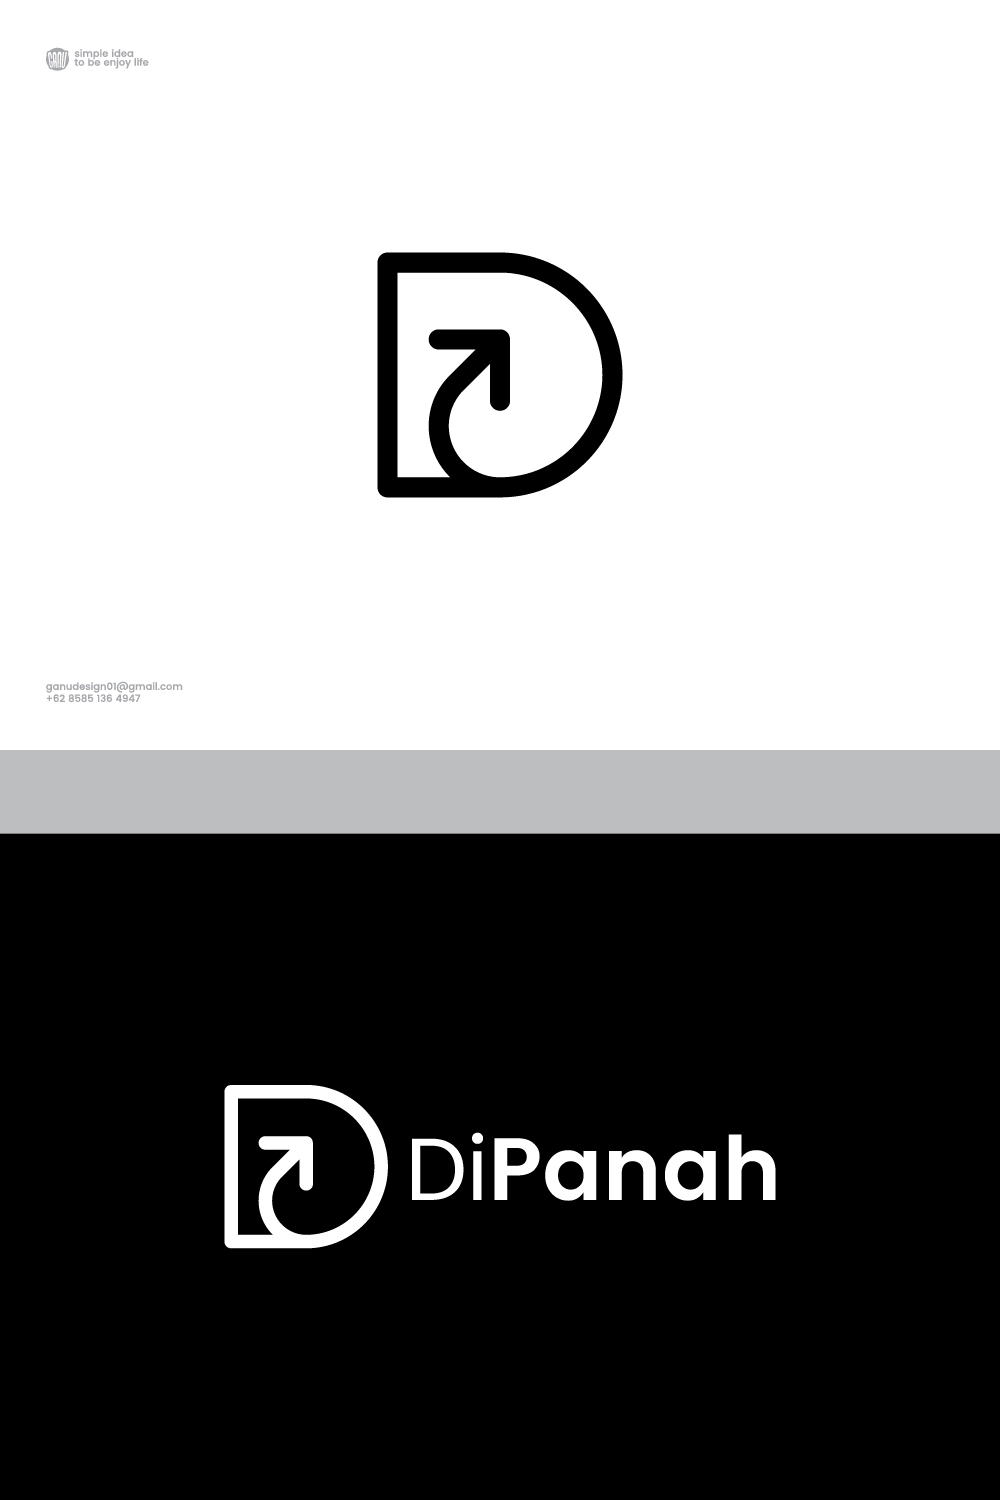 D letter logo with Arrow pinterest preview image.